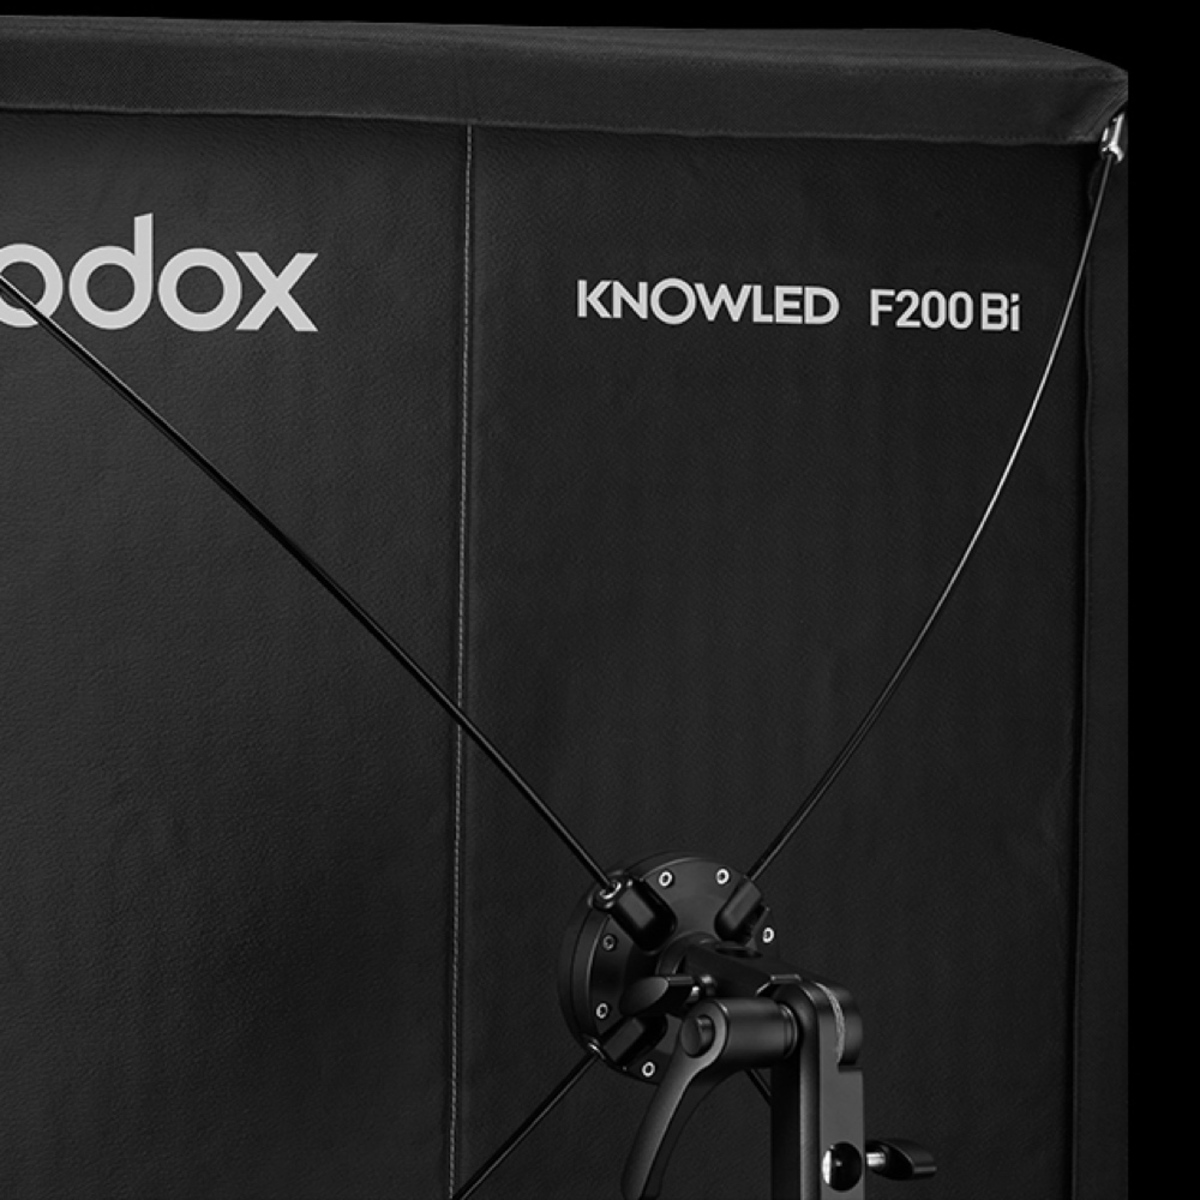 Godox F200Bi KNOWLED Flexible LED Light